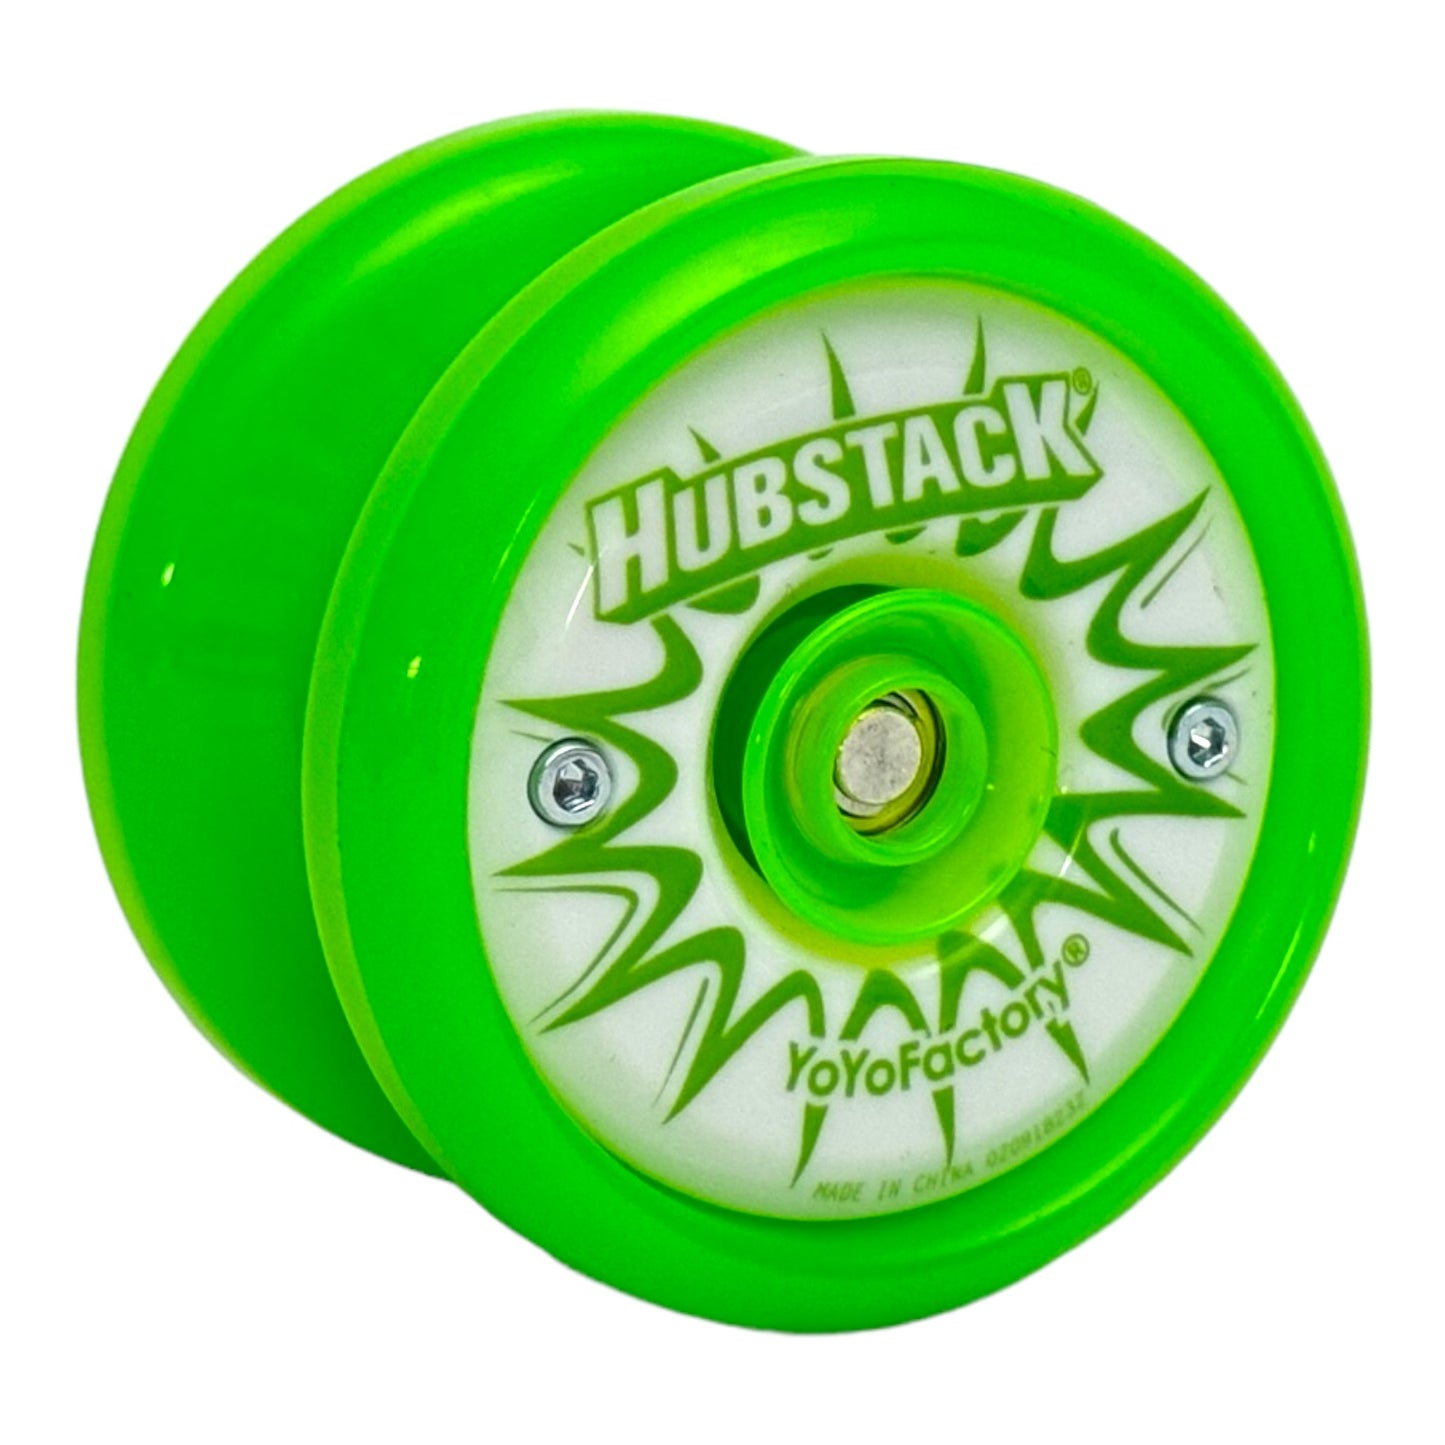 Hubstack yoyo green and white